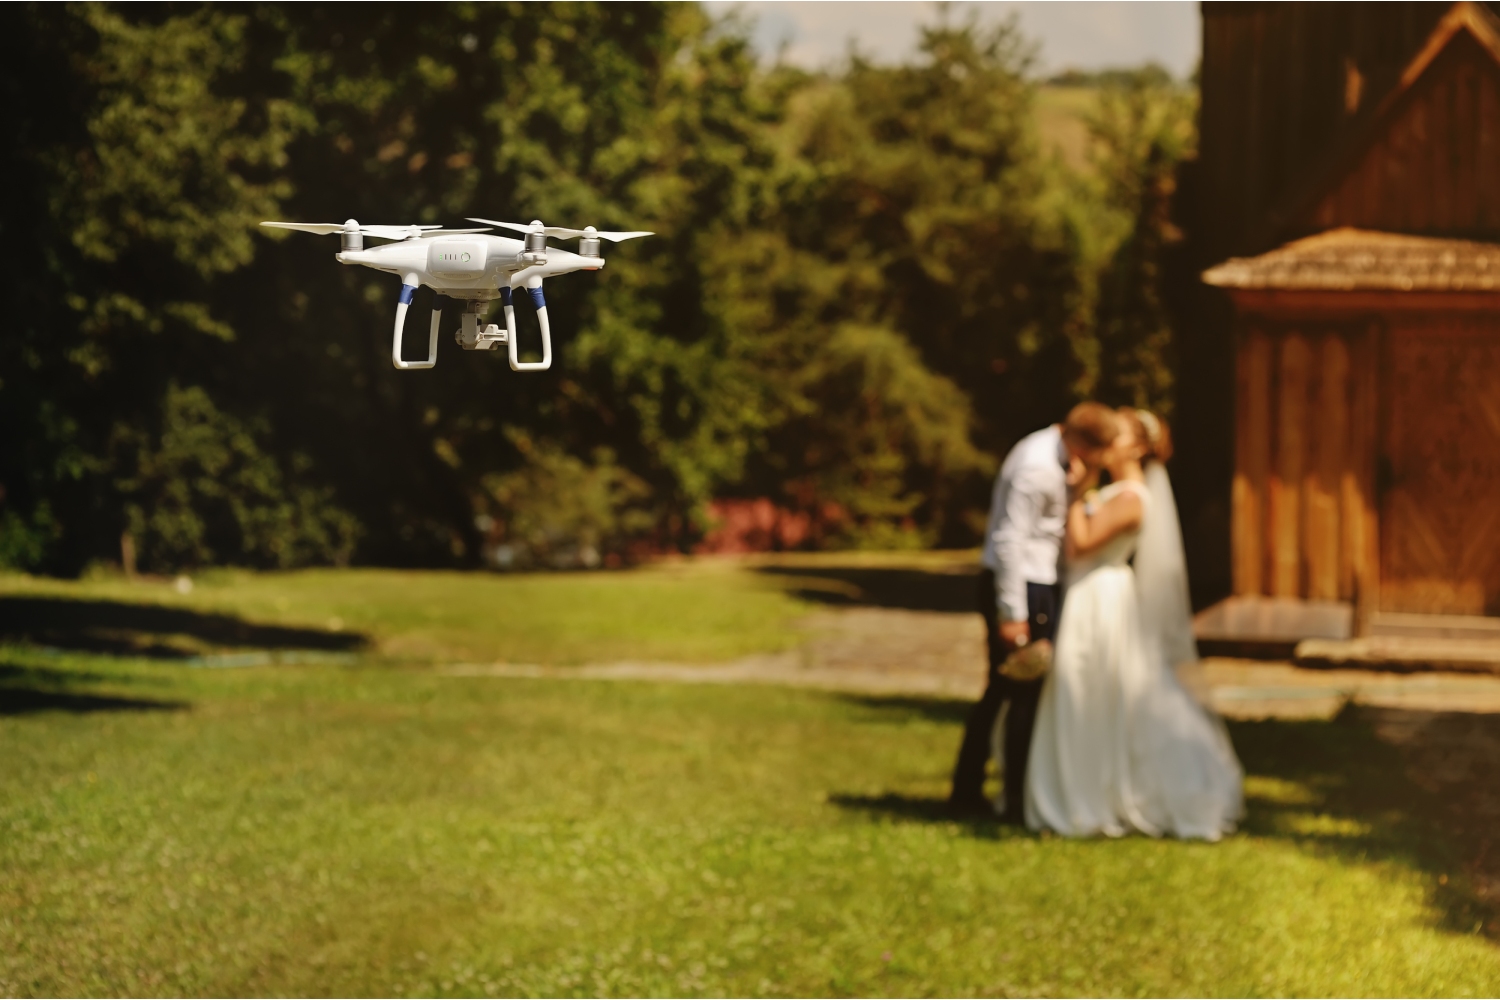 drone-on-weddingjpg